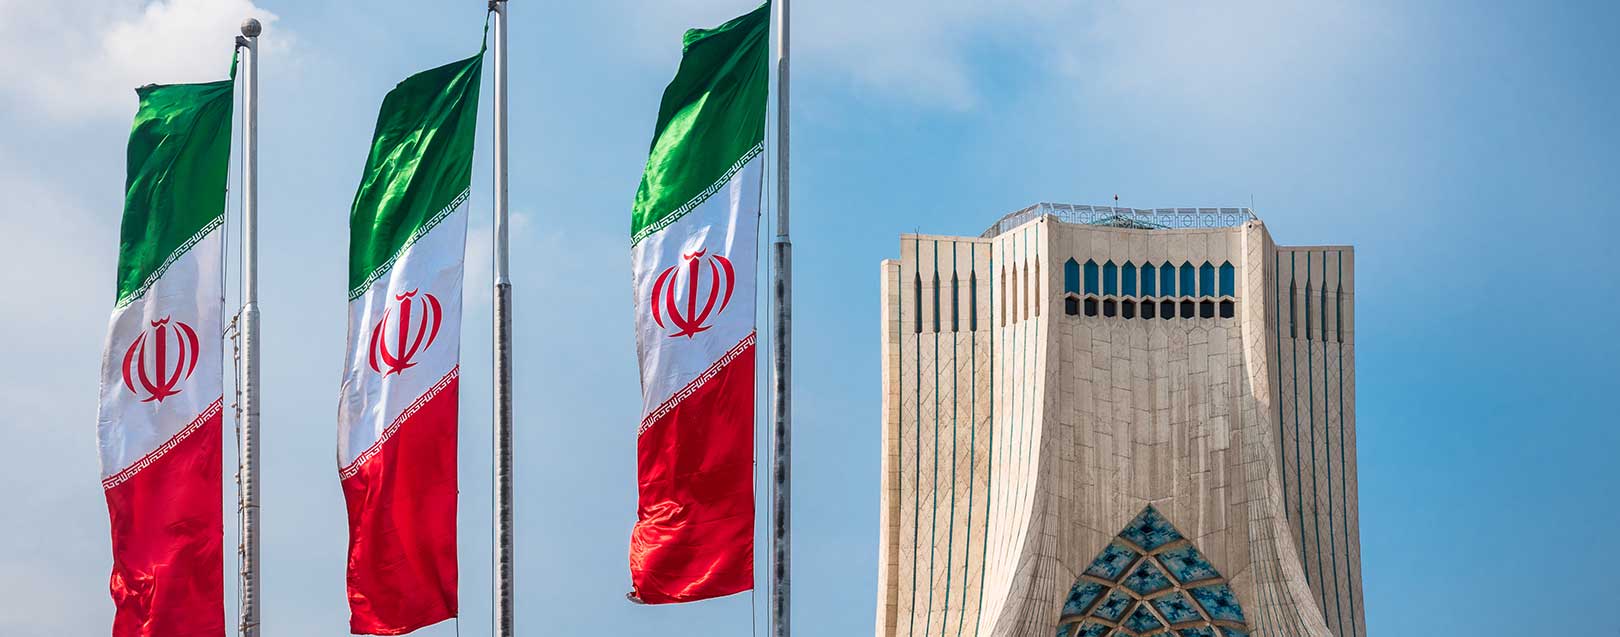 Uncertainty dampening economic sentiment in Iran: IMF